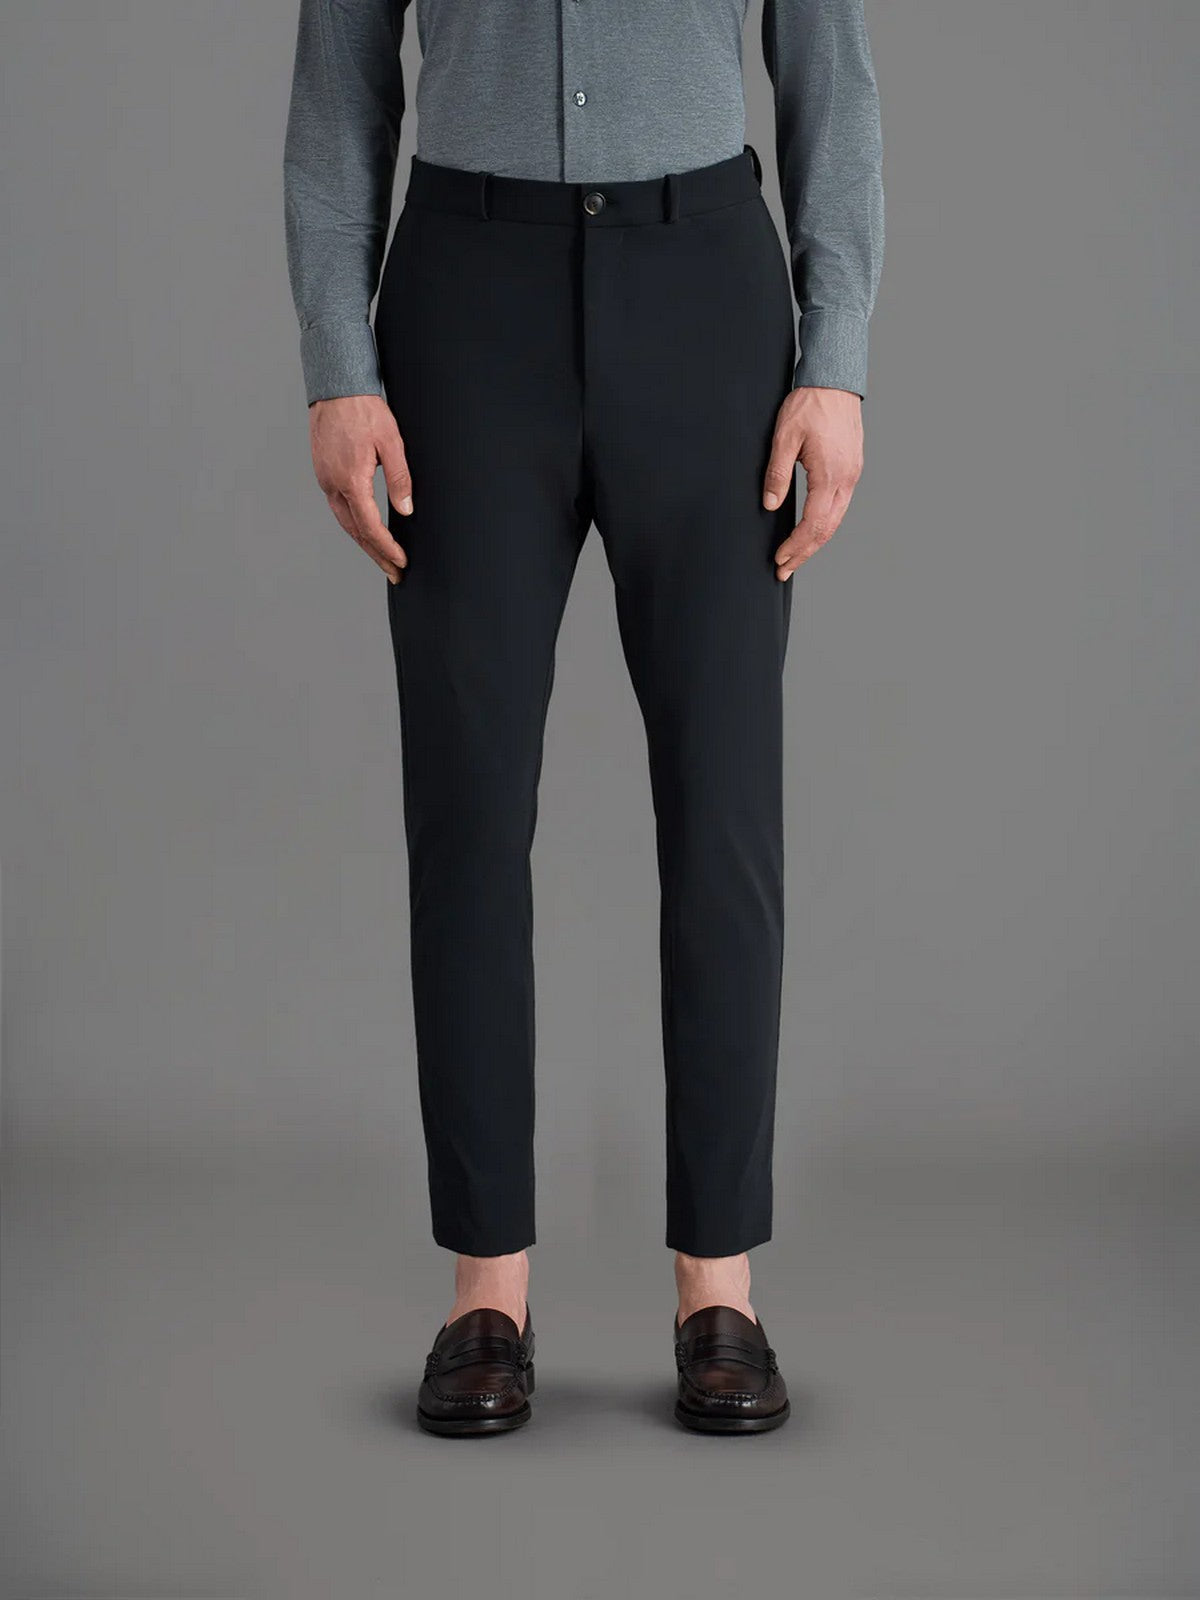 RRD Pantalon Homme W23203 10 Noir